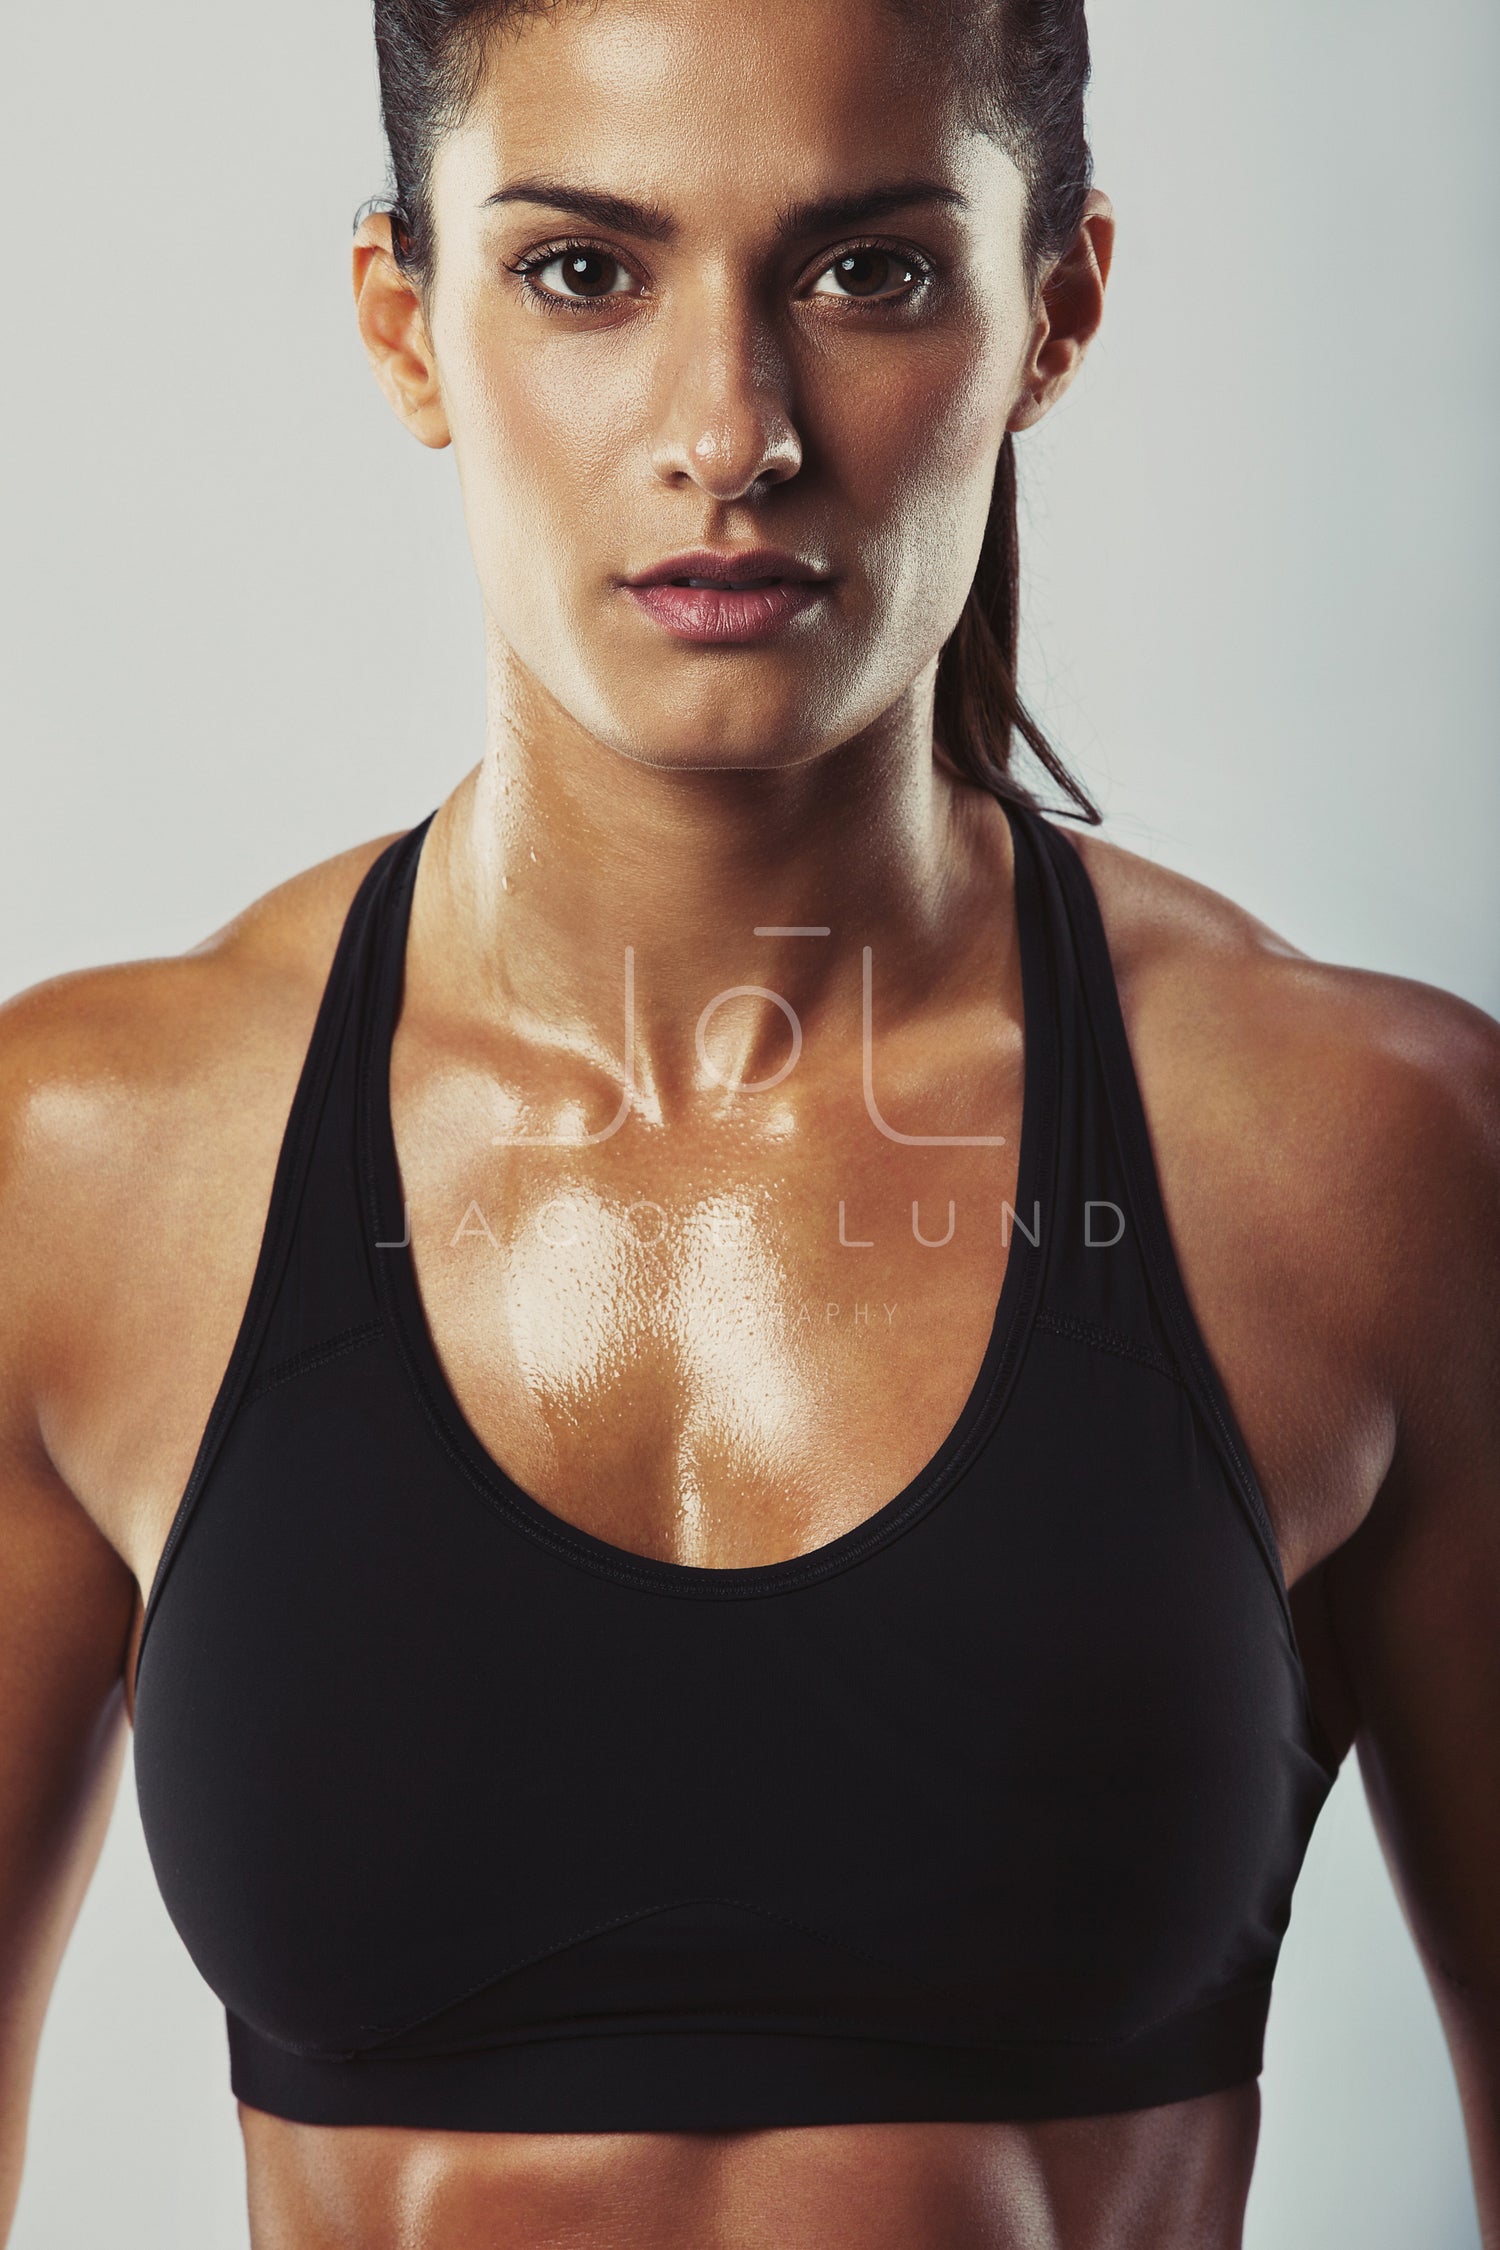 Attractive female bodybuilder posing confidently – Jacob Lund Photography  Store- premium stock photo